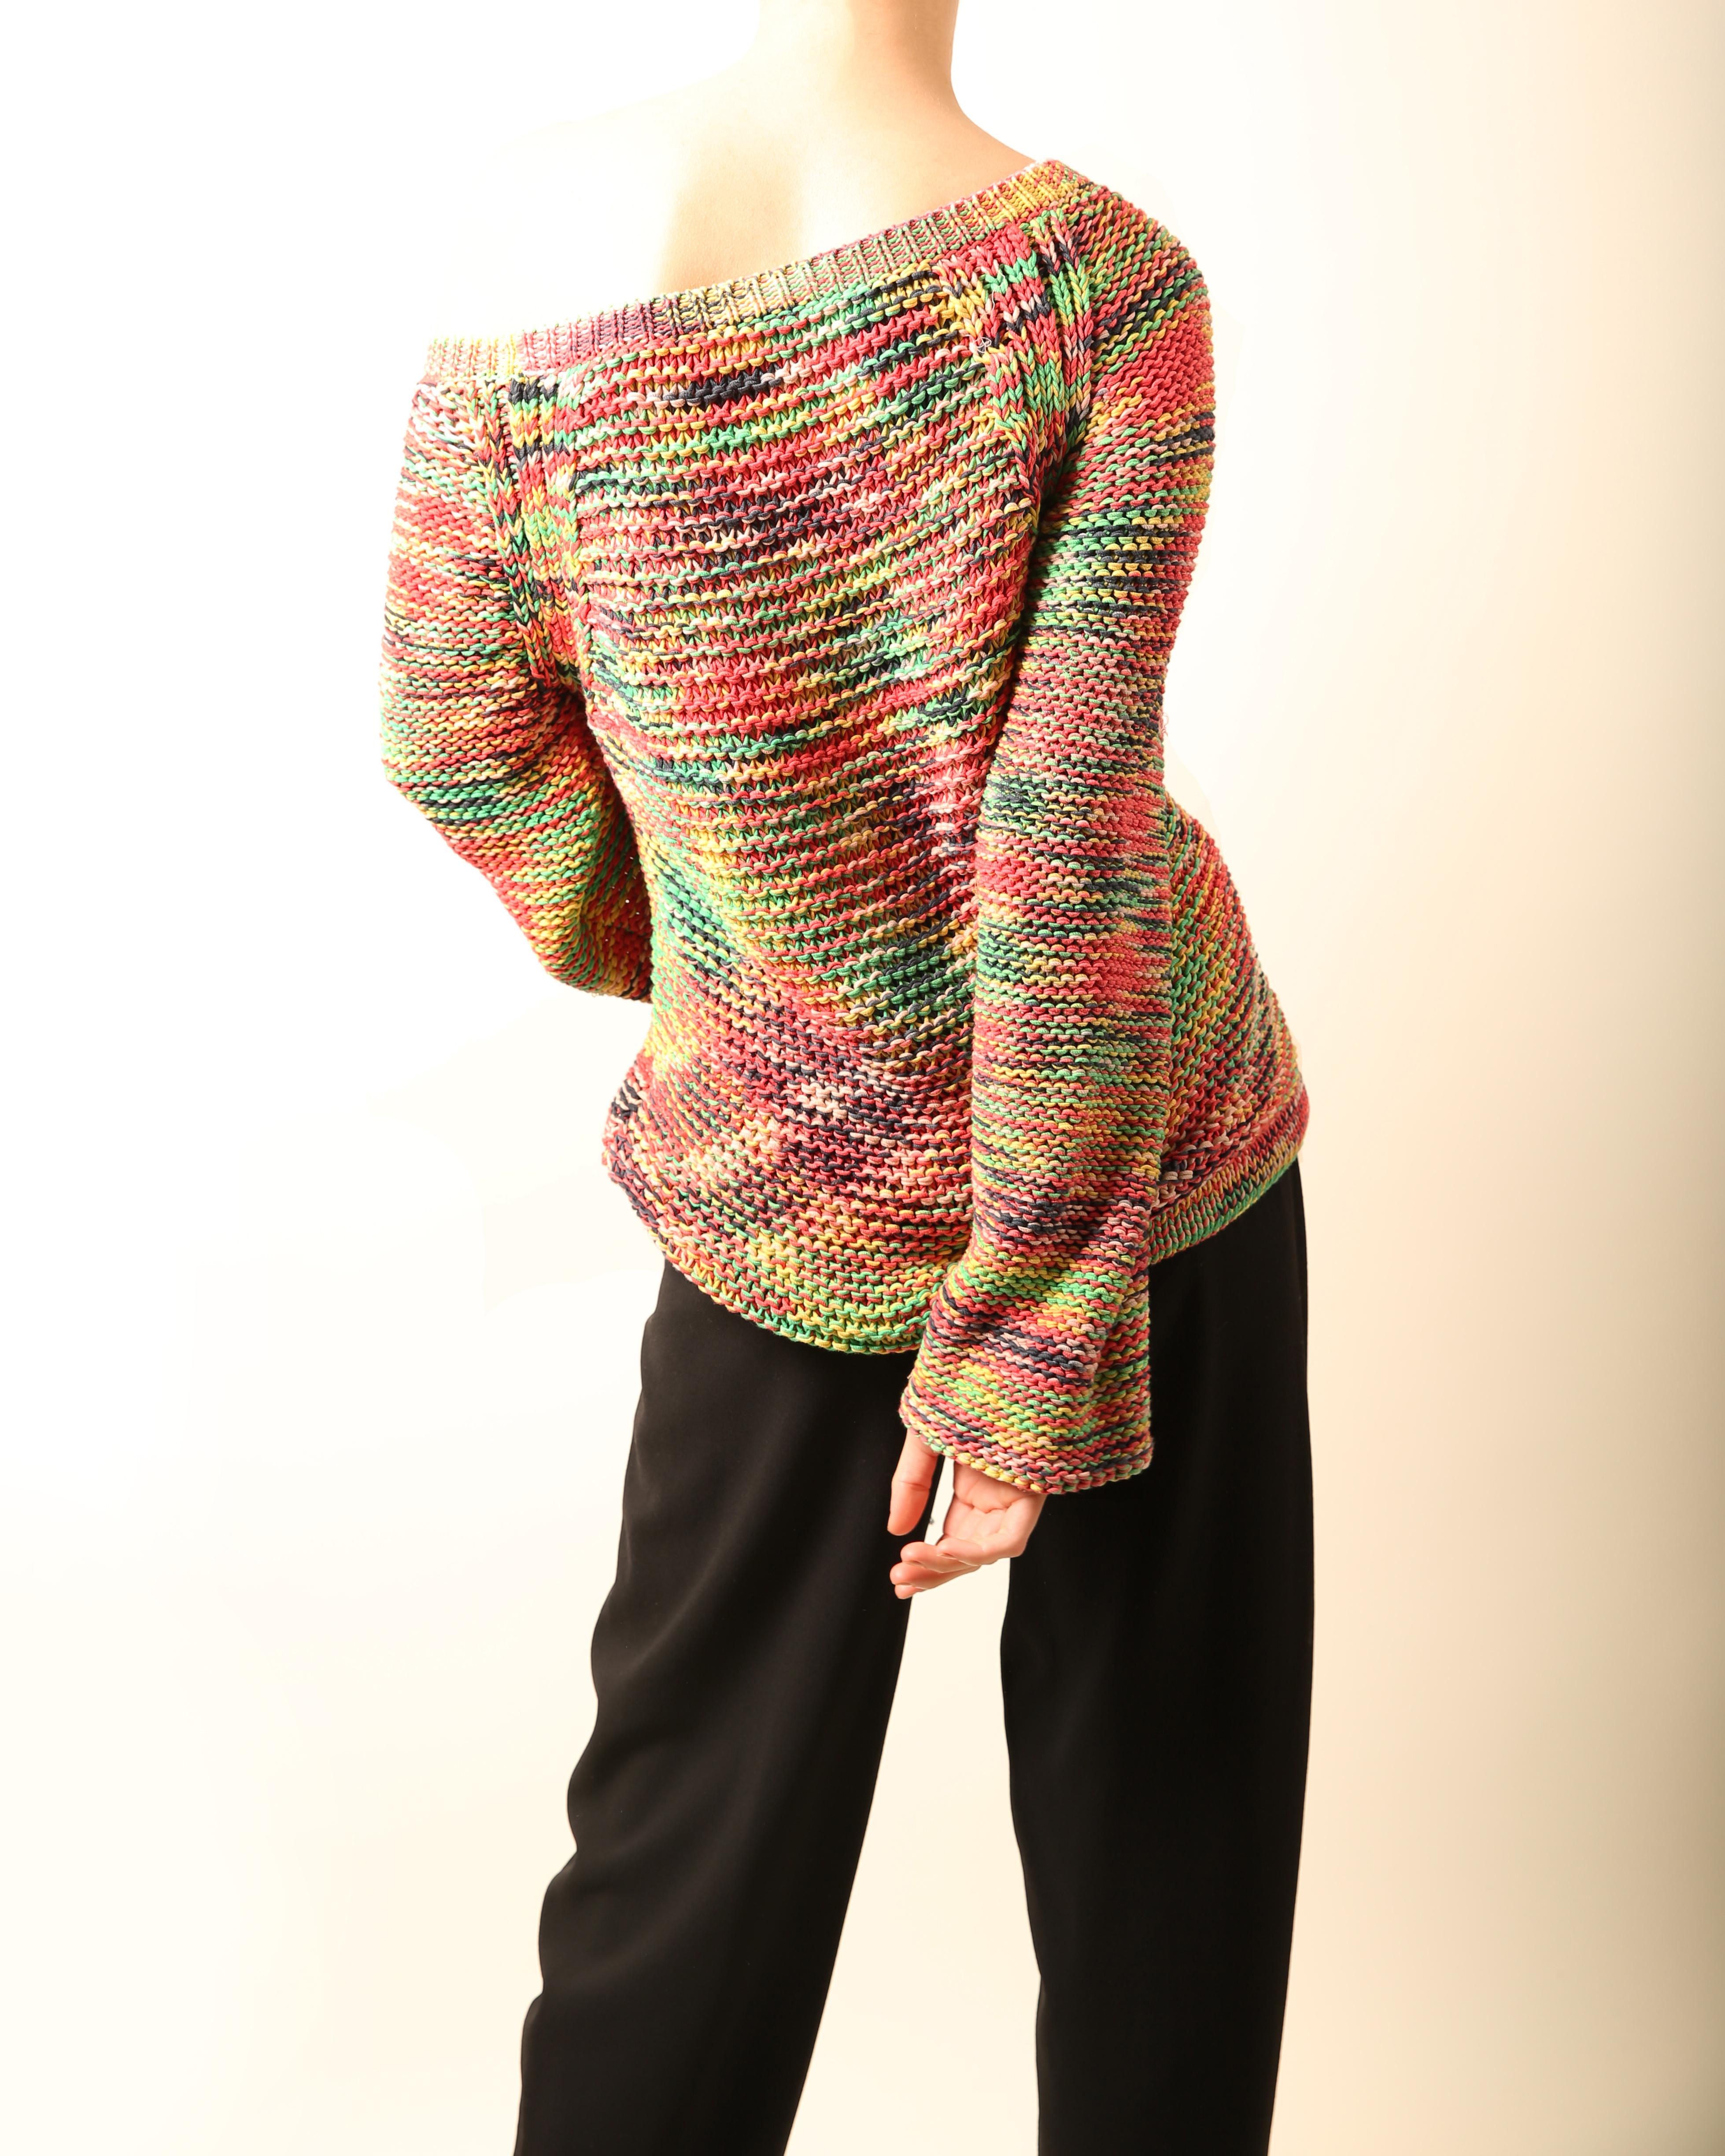 Beige Chloe S/S 2016 oversized chunky knit knitted orange rainbow slouch sweater